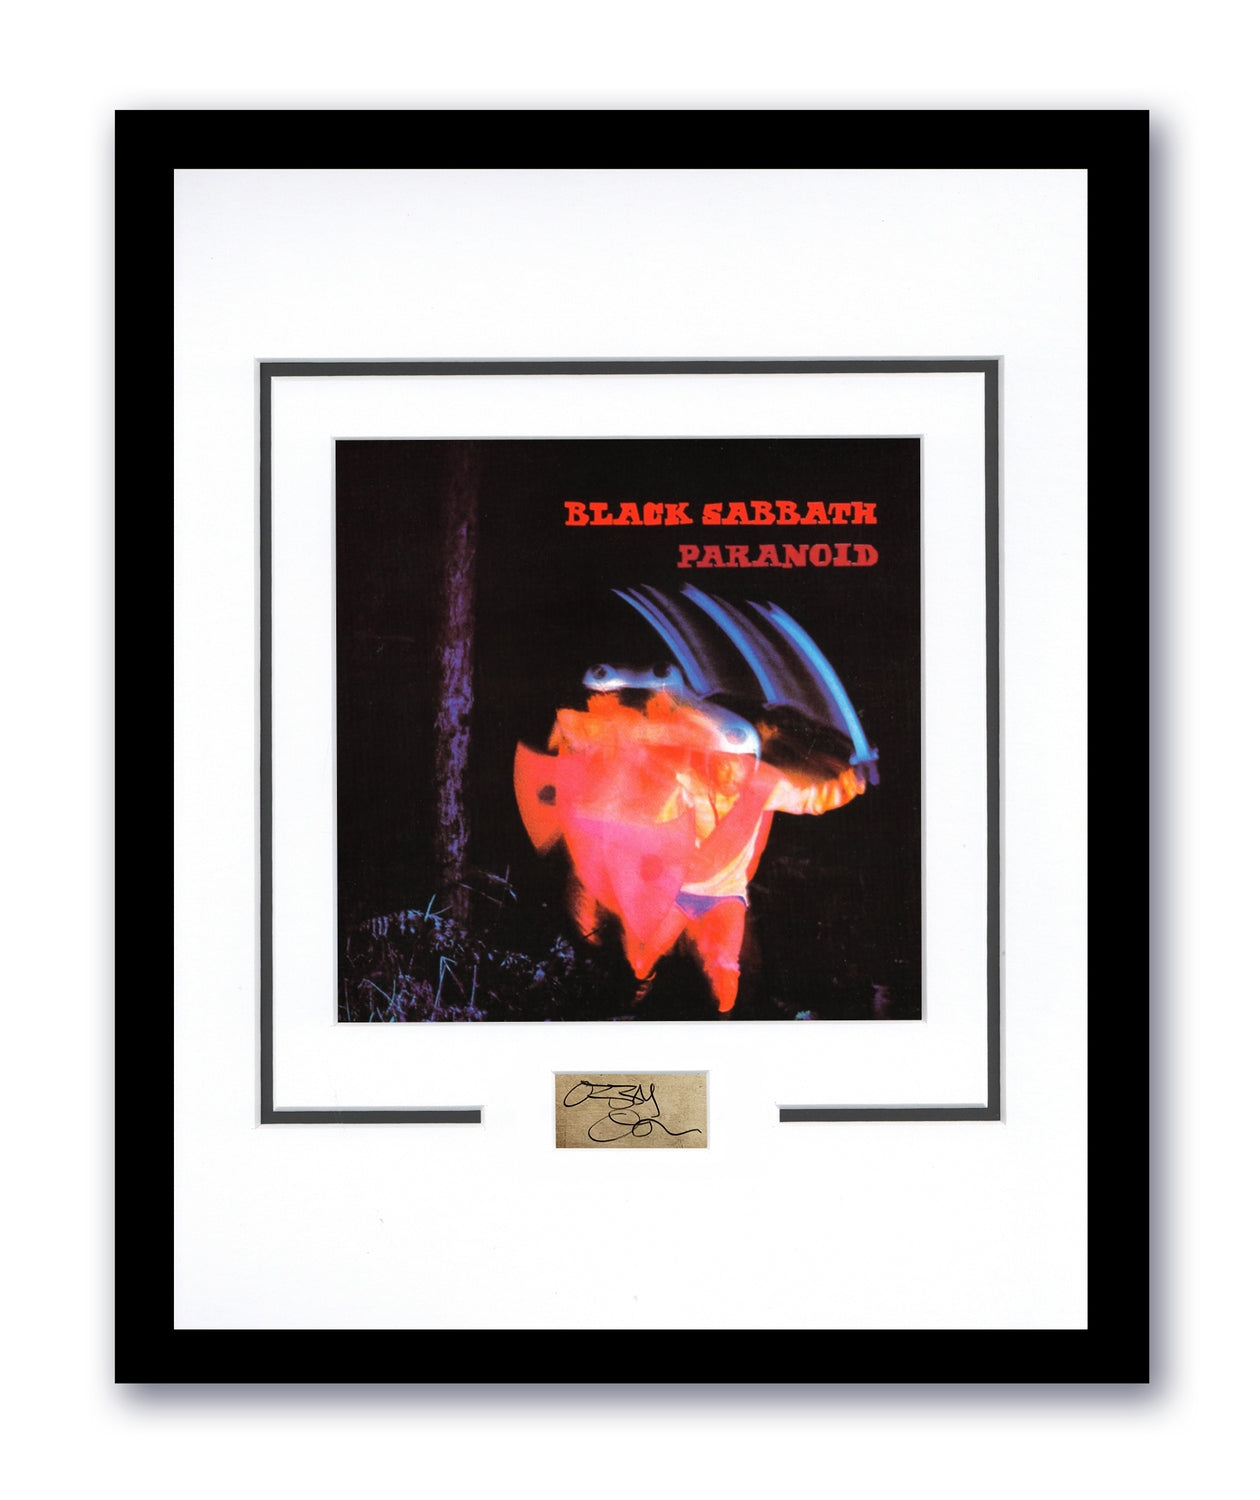 Black Sabbath Ozzy Osbourne Autographed Signed 11x14 Framed Photo Paranoid ACOA